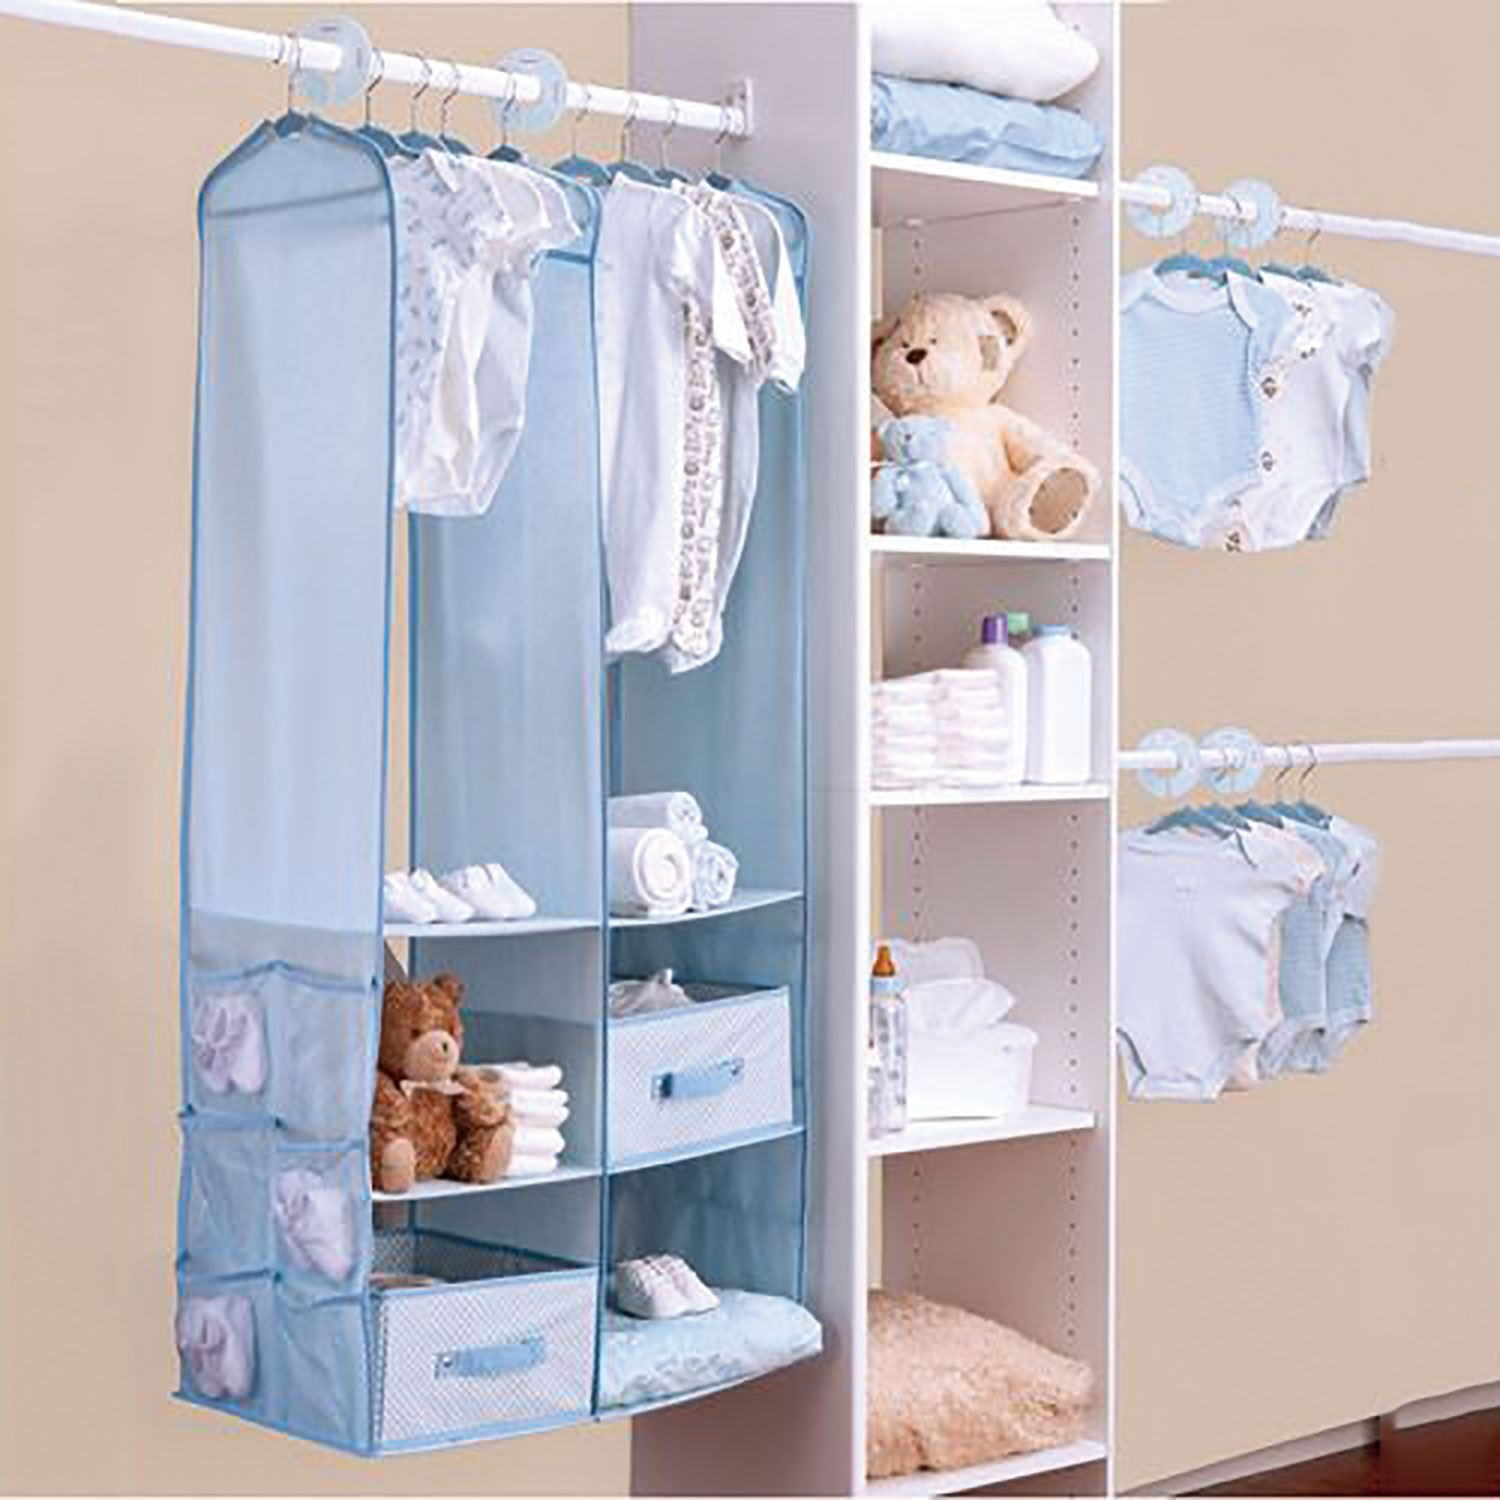 DIY Baby Clothes Organizer
 24pc Childrens Kids Baby Nursery Closet Organiser Hanging